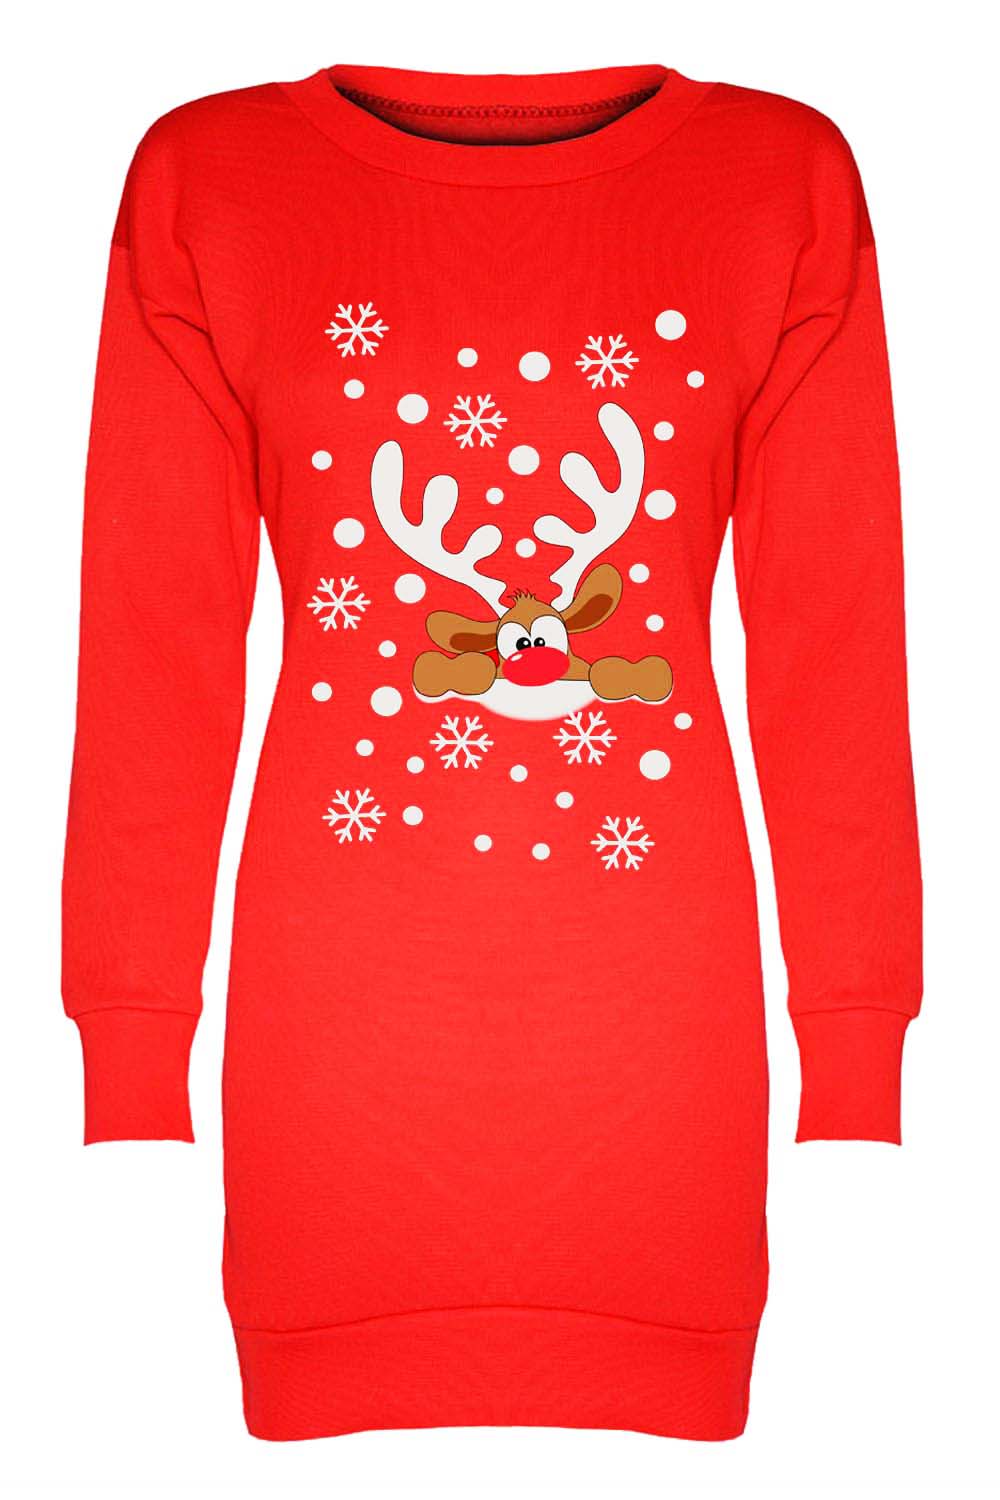 Reindeer Graphic Print Christmas Jumper Dress - bejealous-com